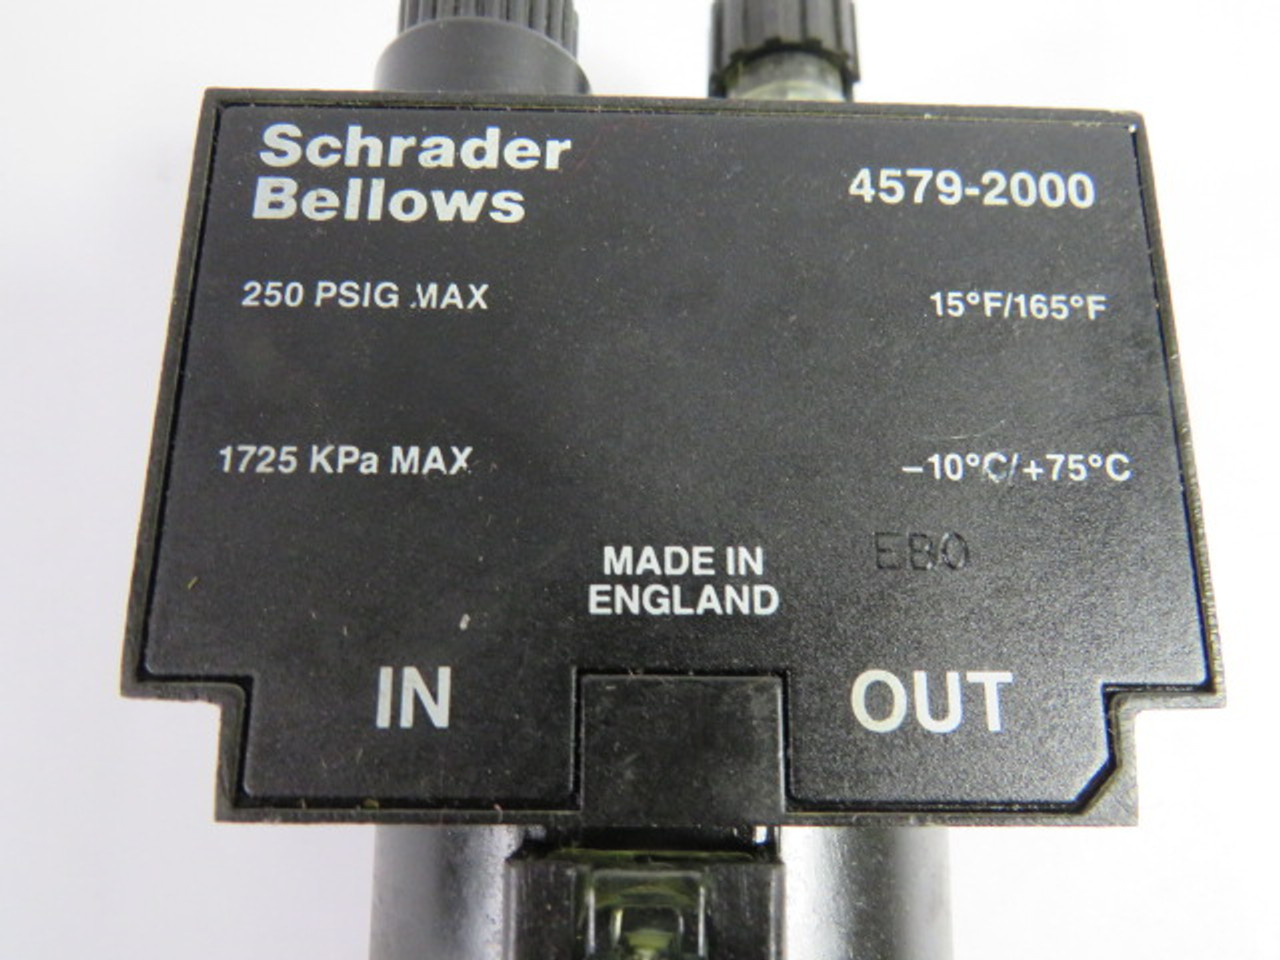 Schrader Bellows 4579-2000 Lubricator Filter 250PSI USED